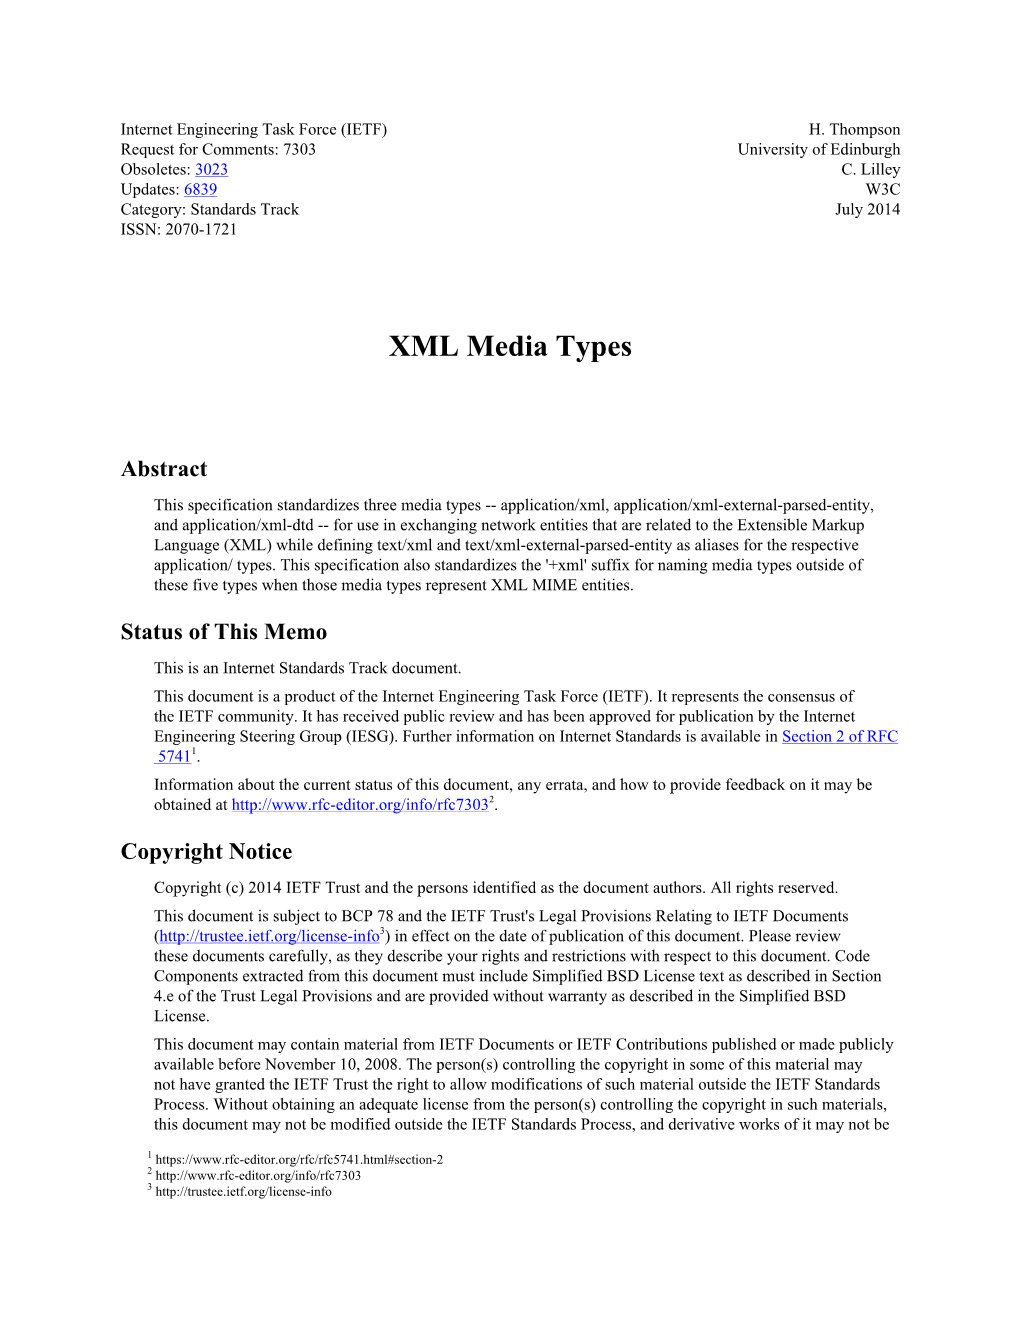 XML Media Types